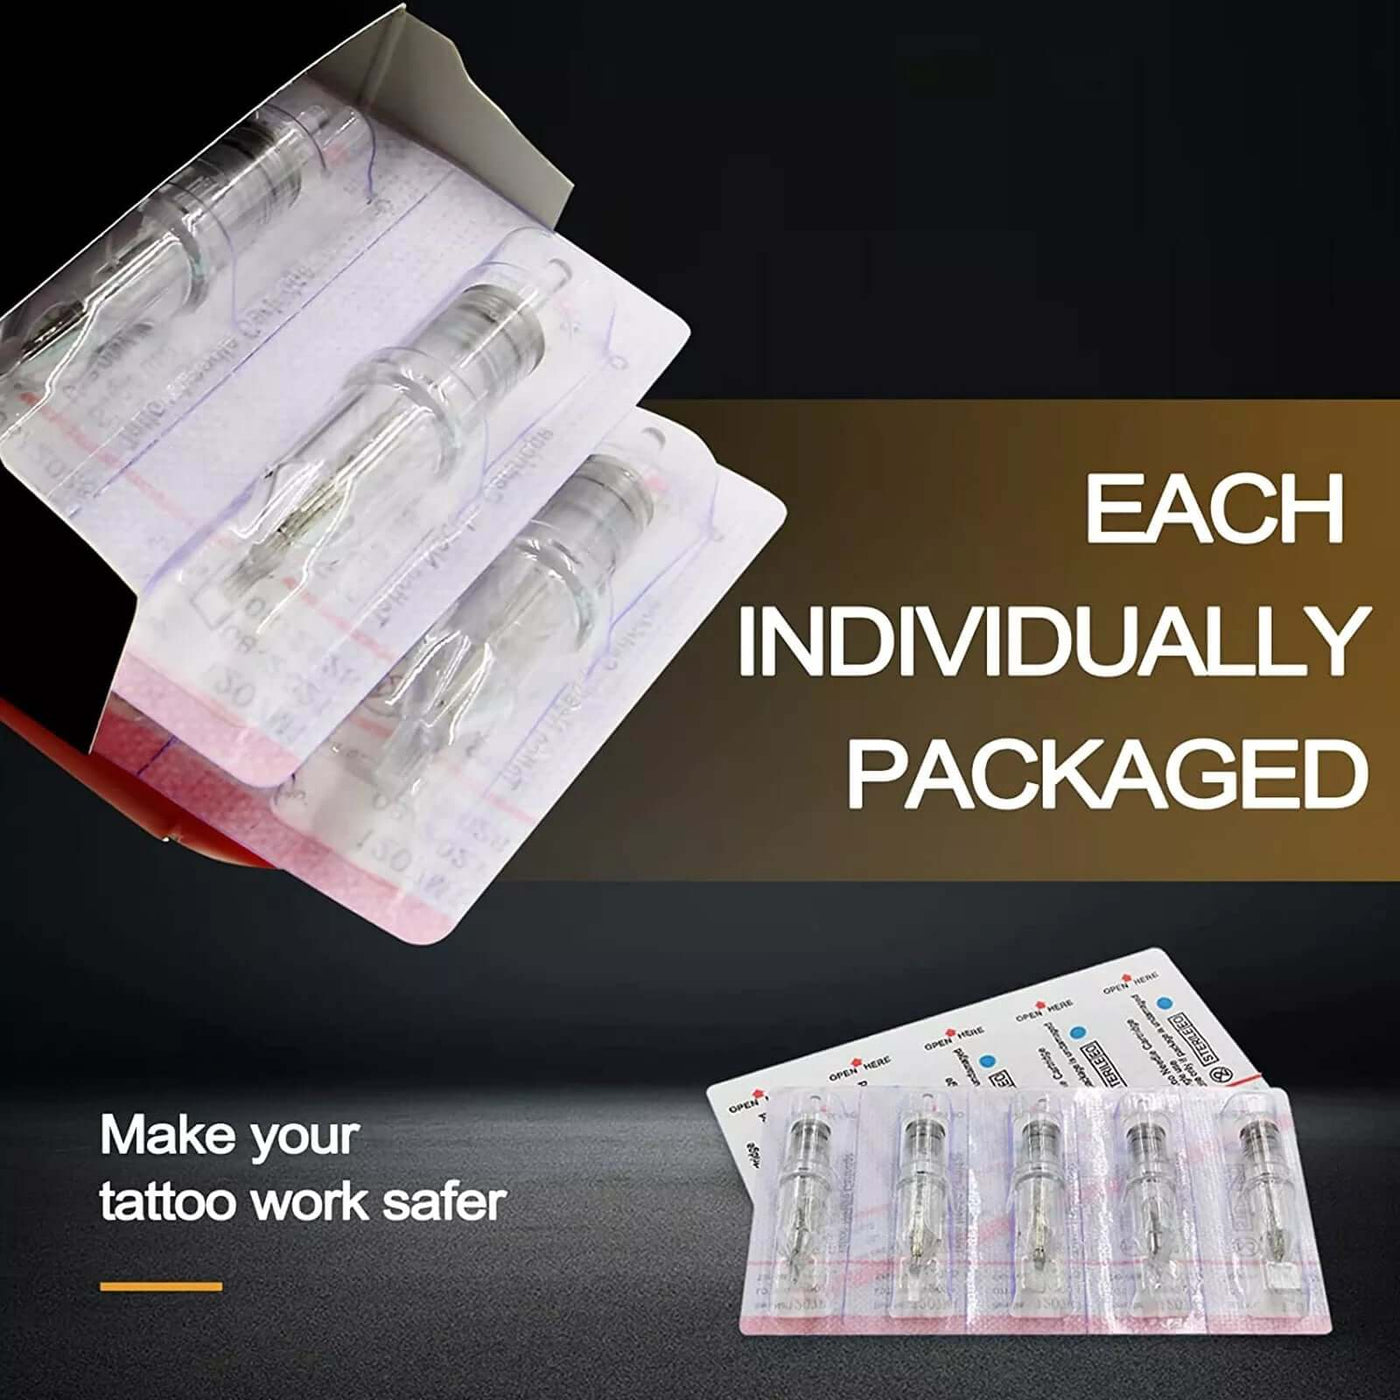 Individual packaged cartridge needles